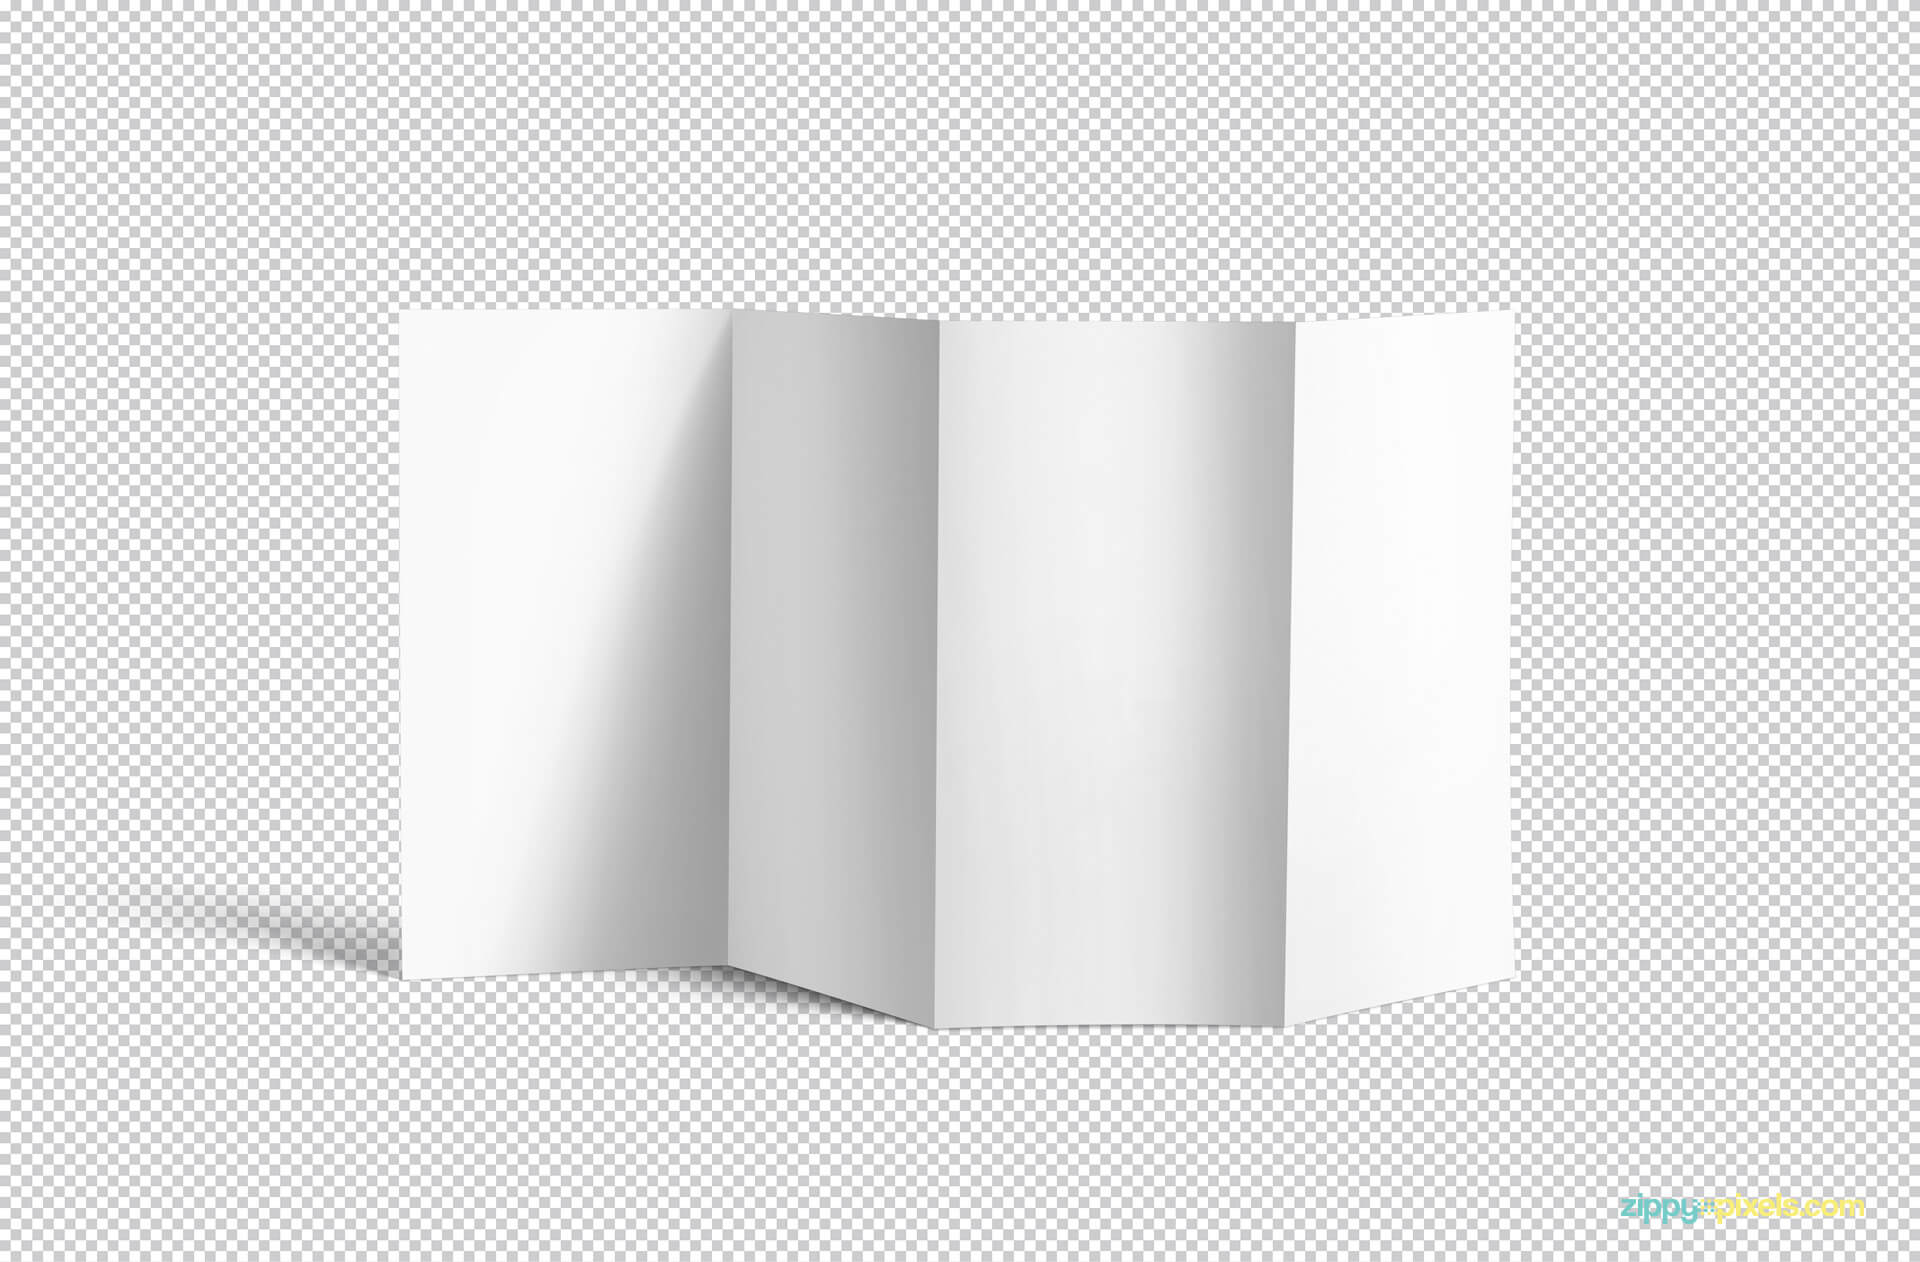 Free 4 Fold Brochure Mockup | Zippypixels For 4 Fold Brochure Template Word